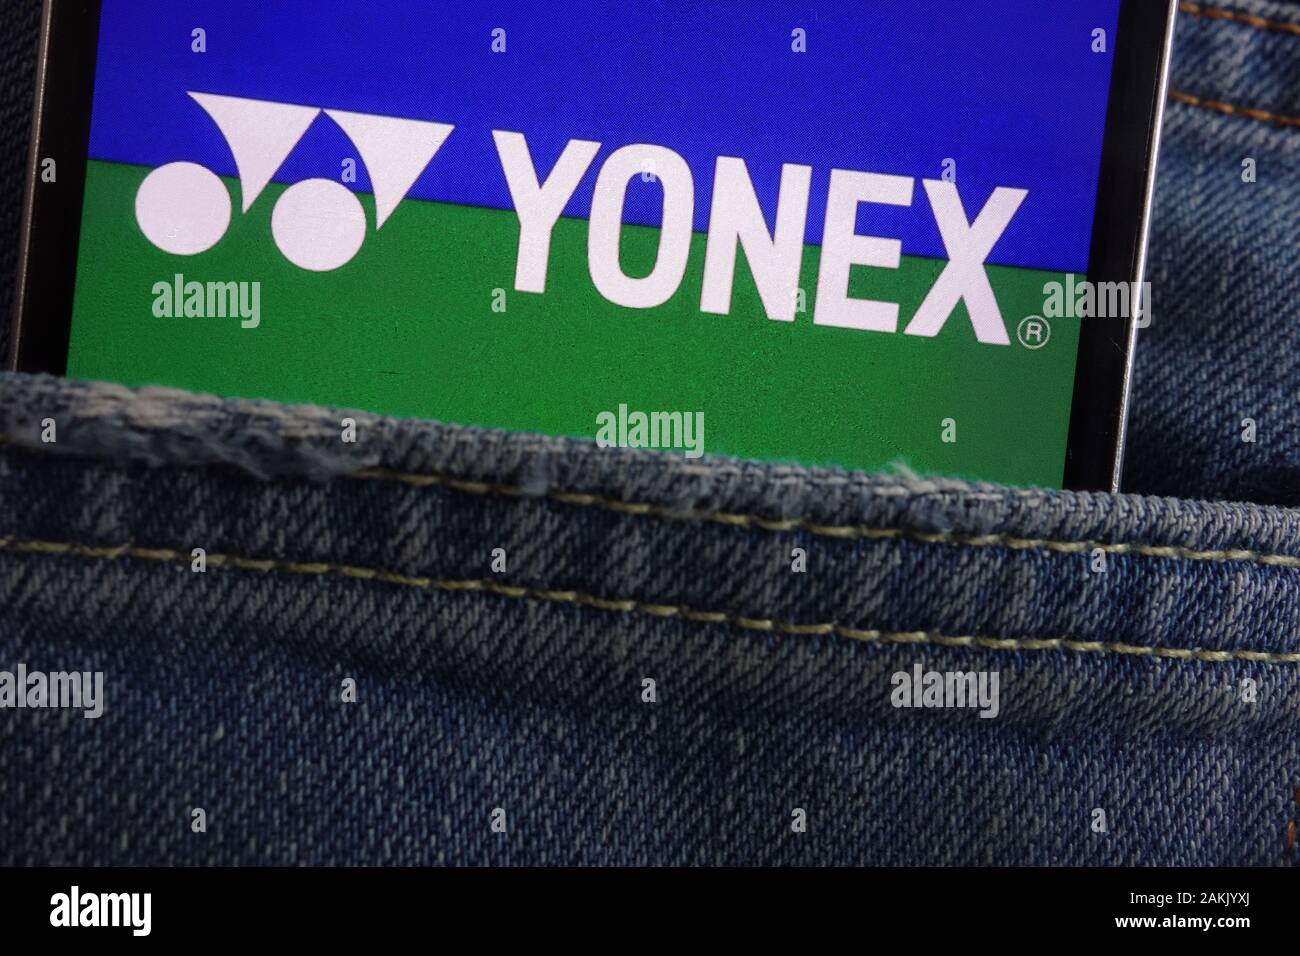 Yonex logo displayed on smartphone hidden in jeans pocket Stock Photo